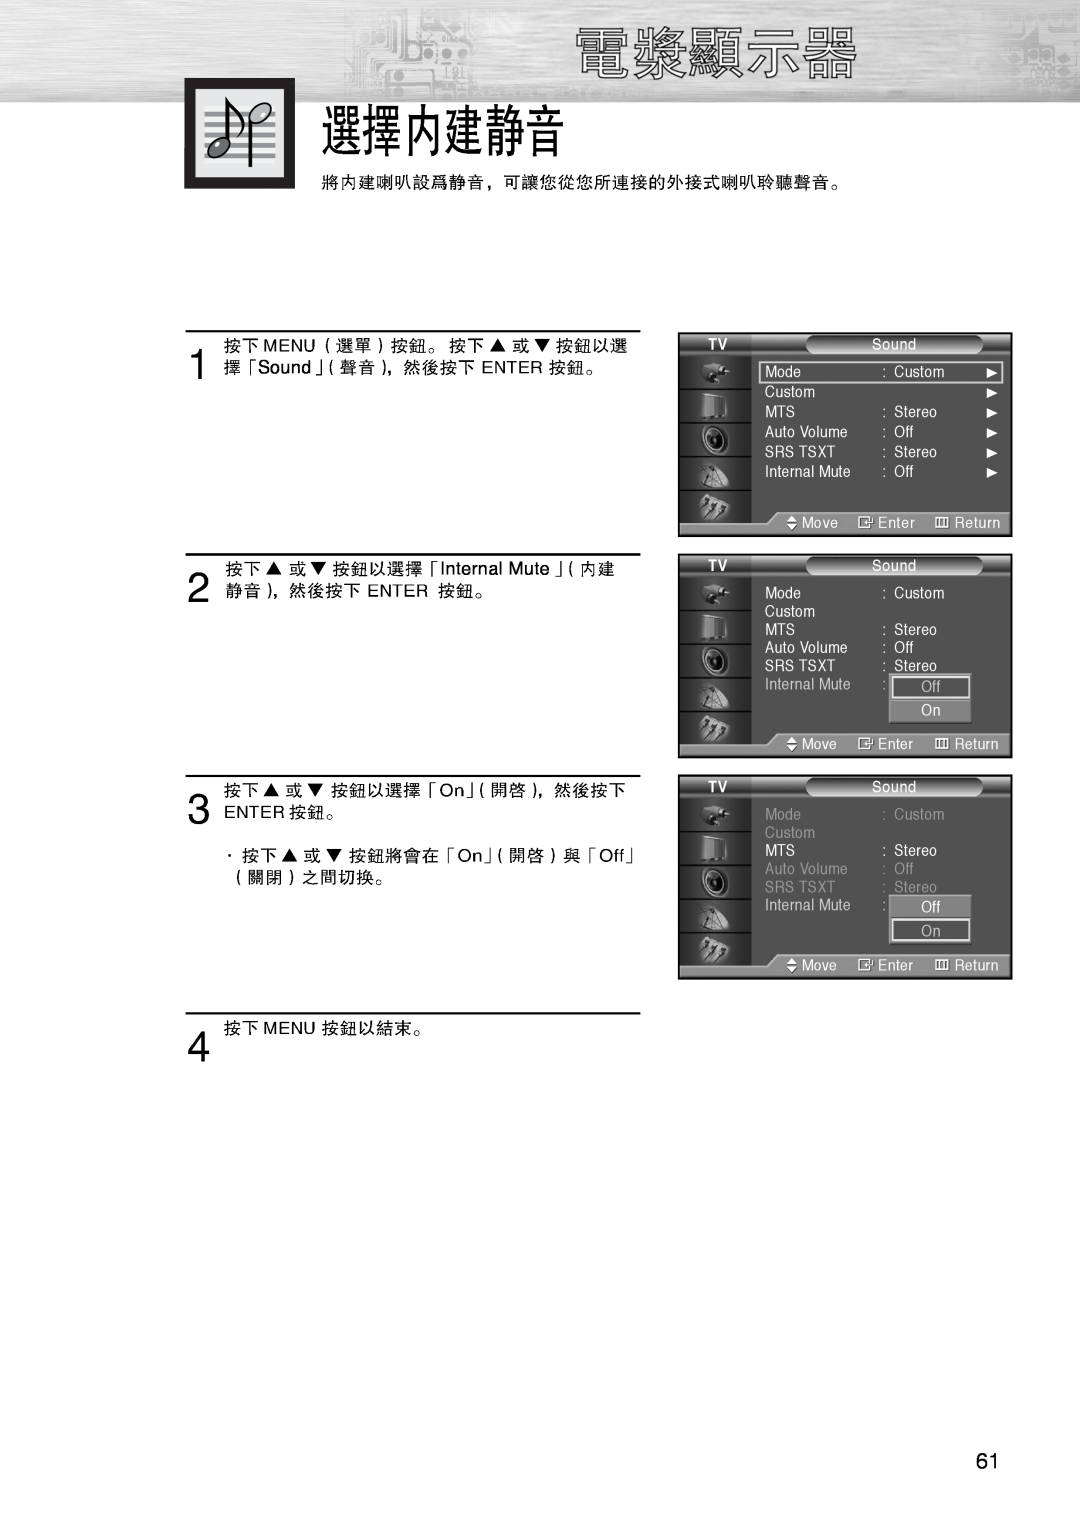 Samsung PL-42D4S manual Internal Mute, Mode, Custom, Auto Volume, Srs Tsxt, Stereo 